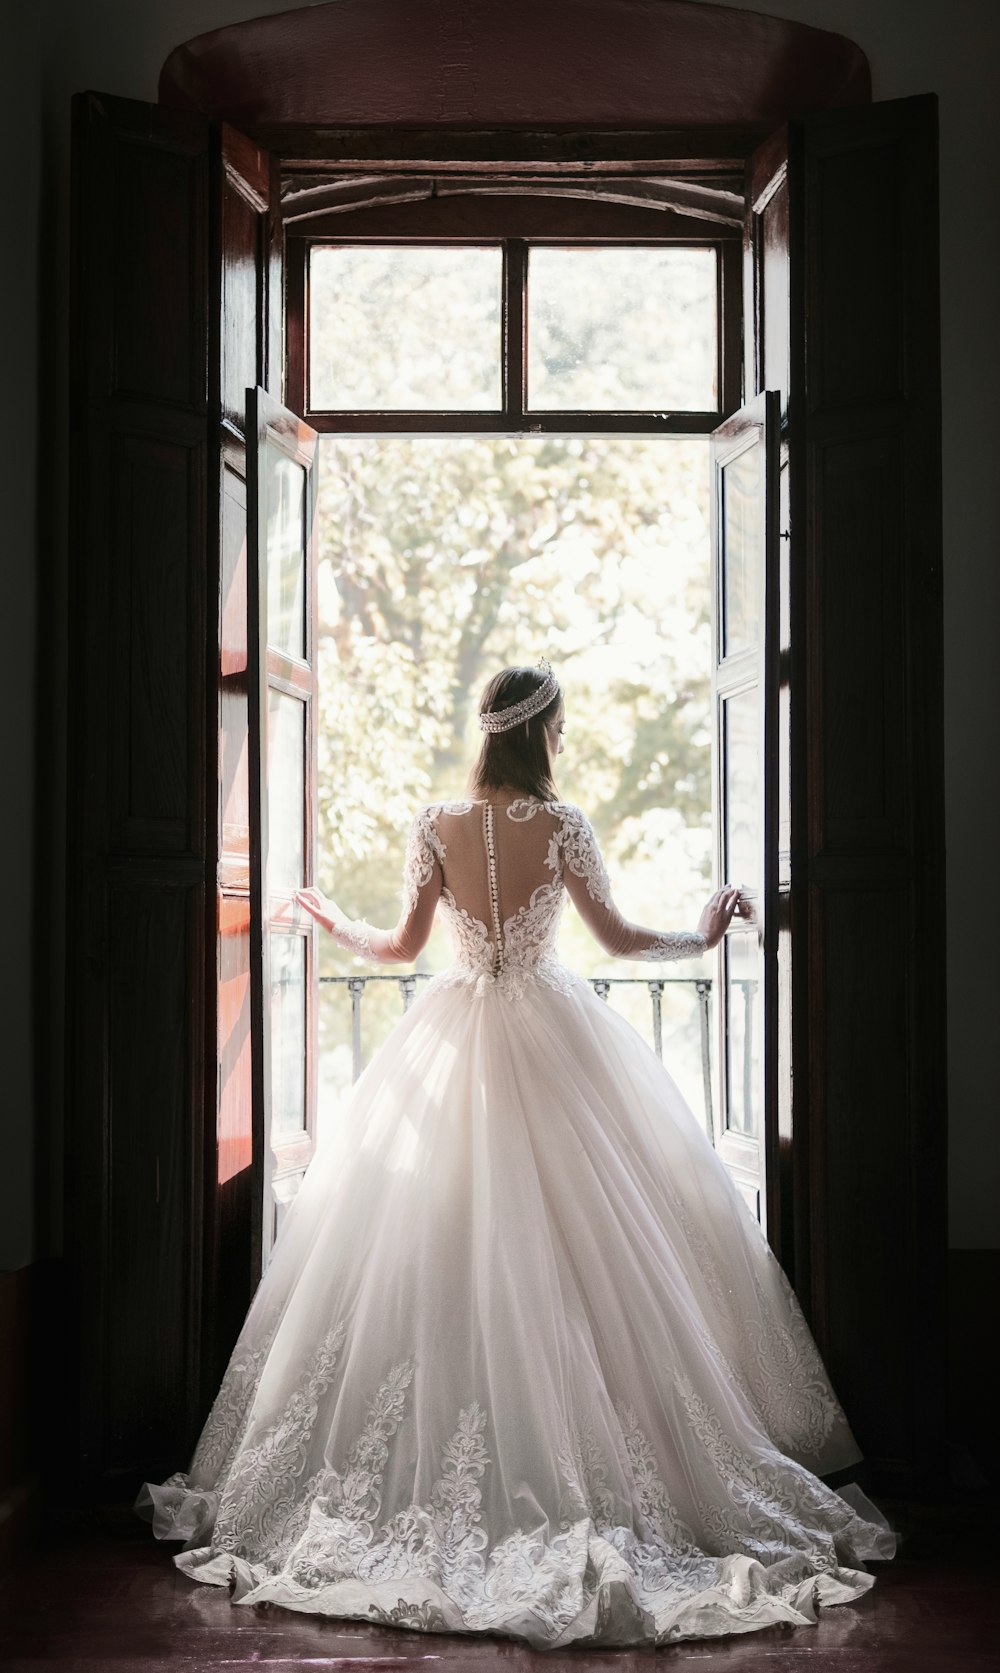 woman in white wedding dress standing near window during daytime